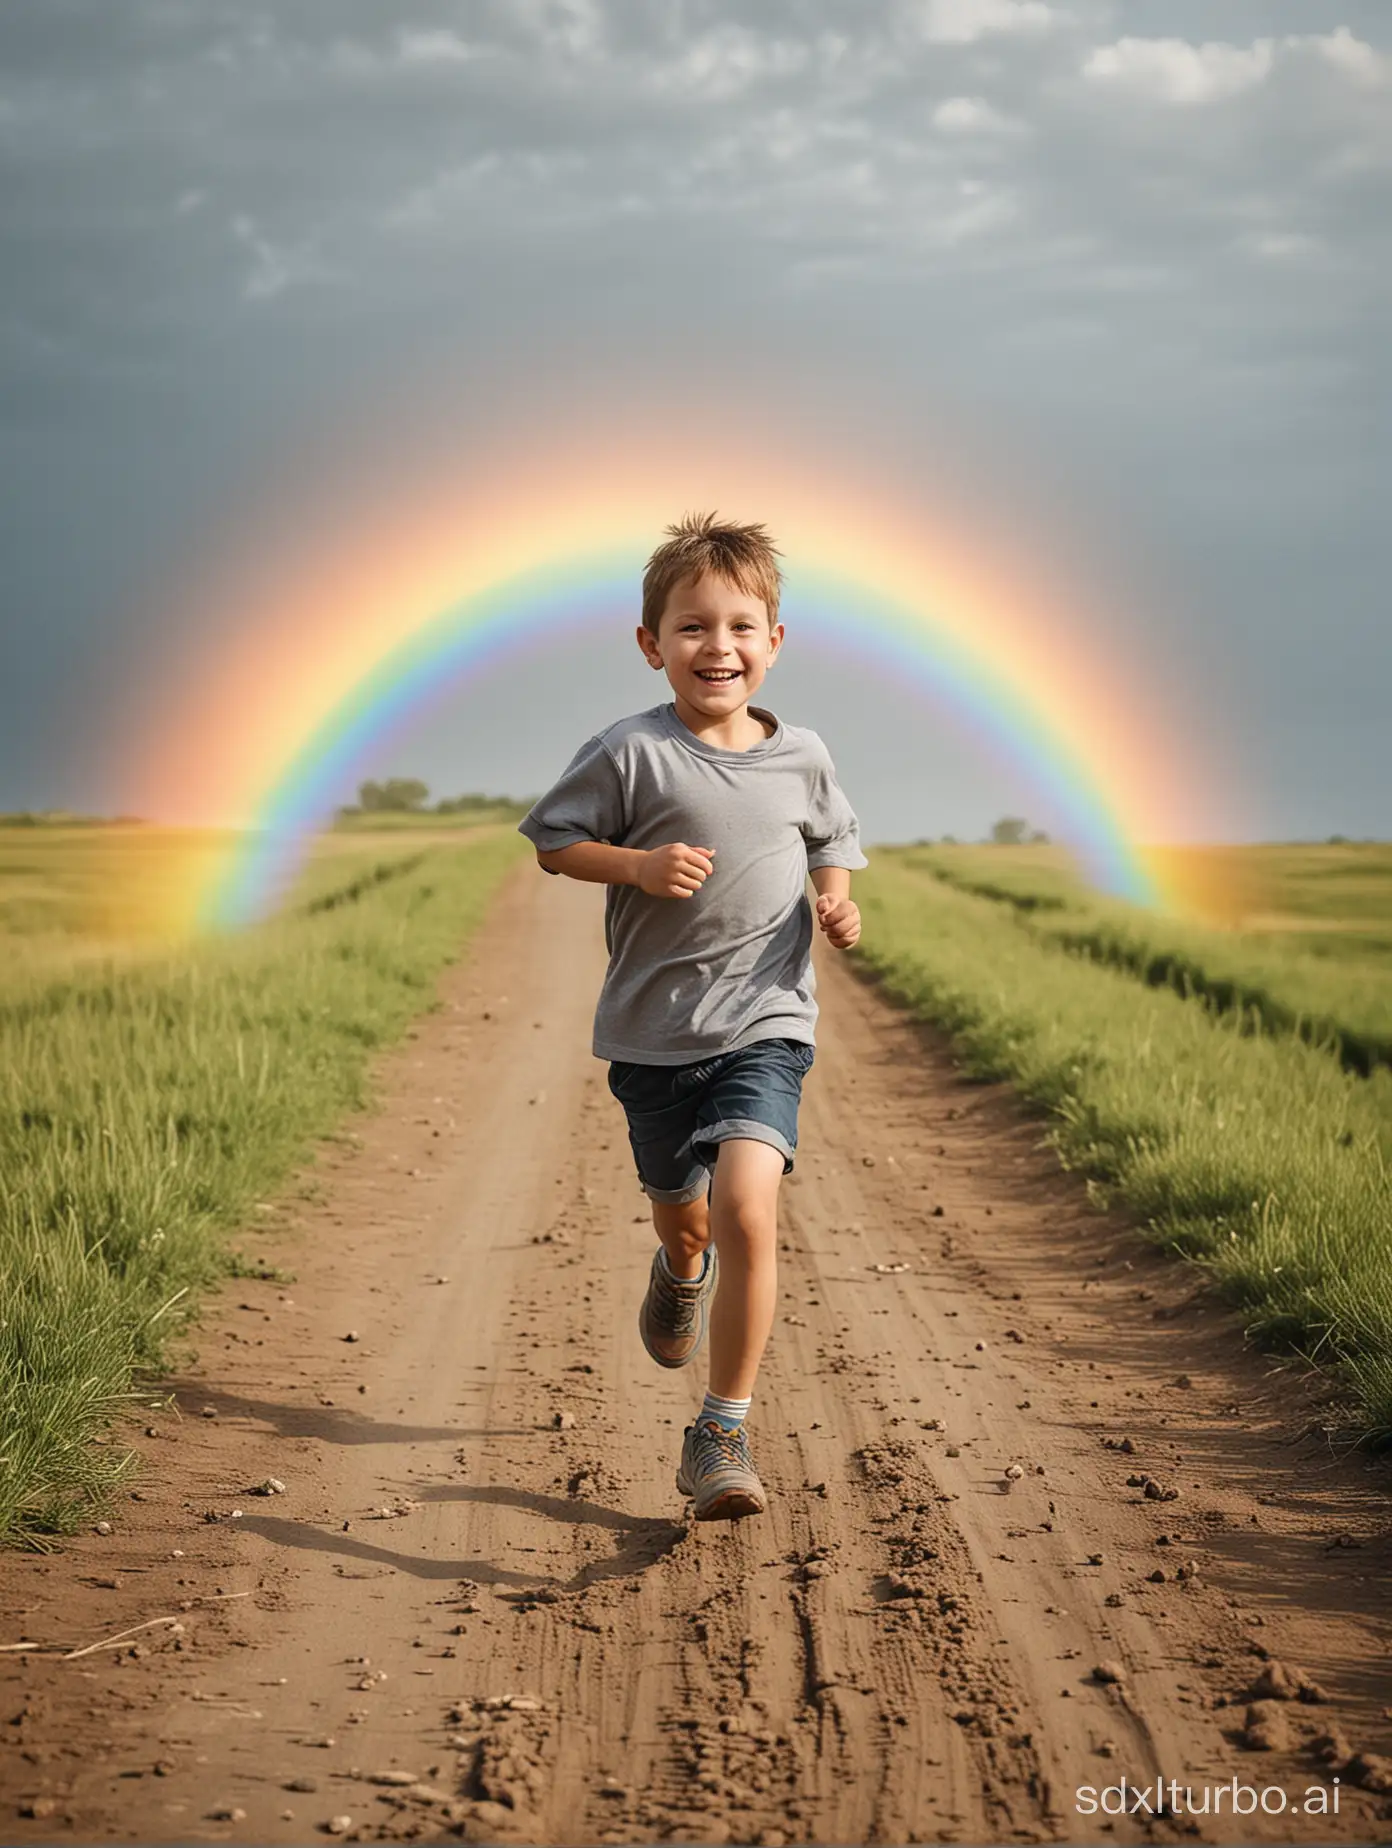 A boy running on the rainbow